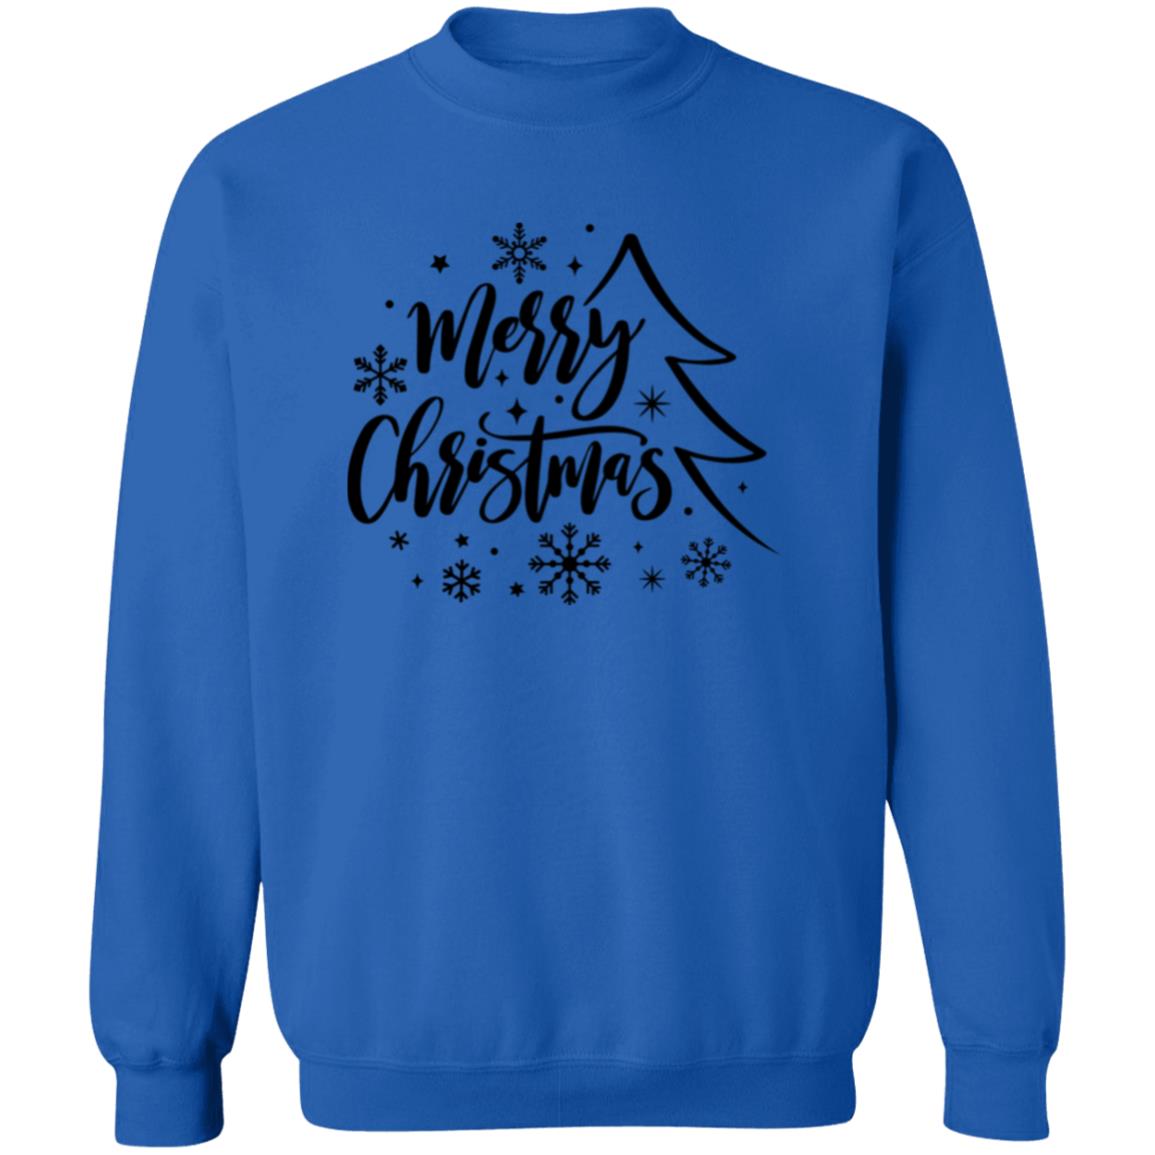 Merry Christmas Crewneck Sweatshirt 8 oz (Closeout)